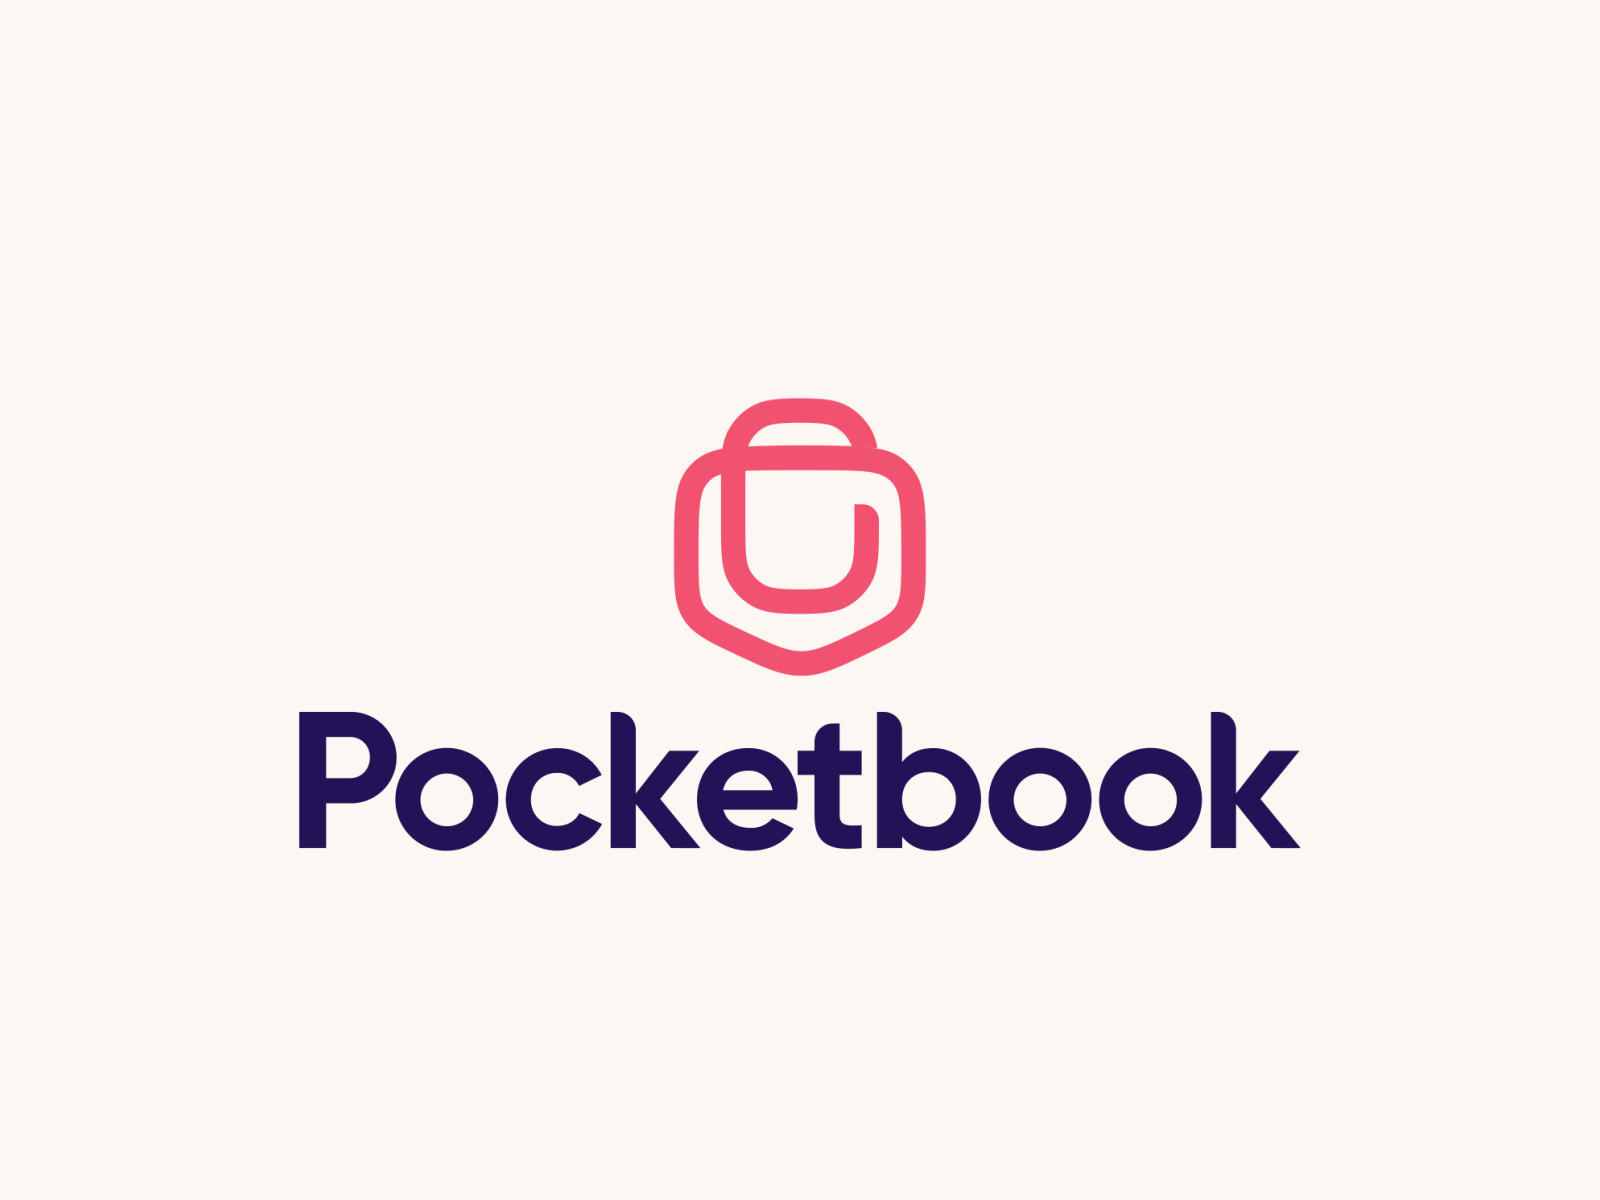 Pocketbook logo animation